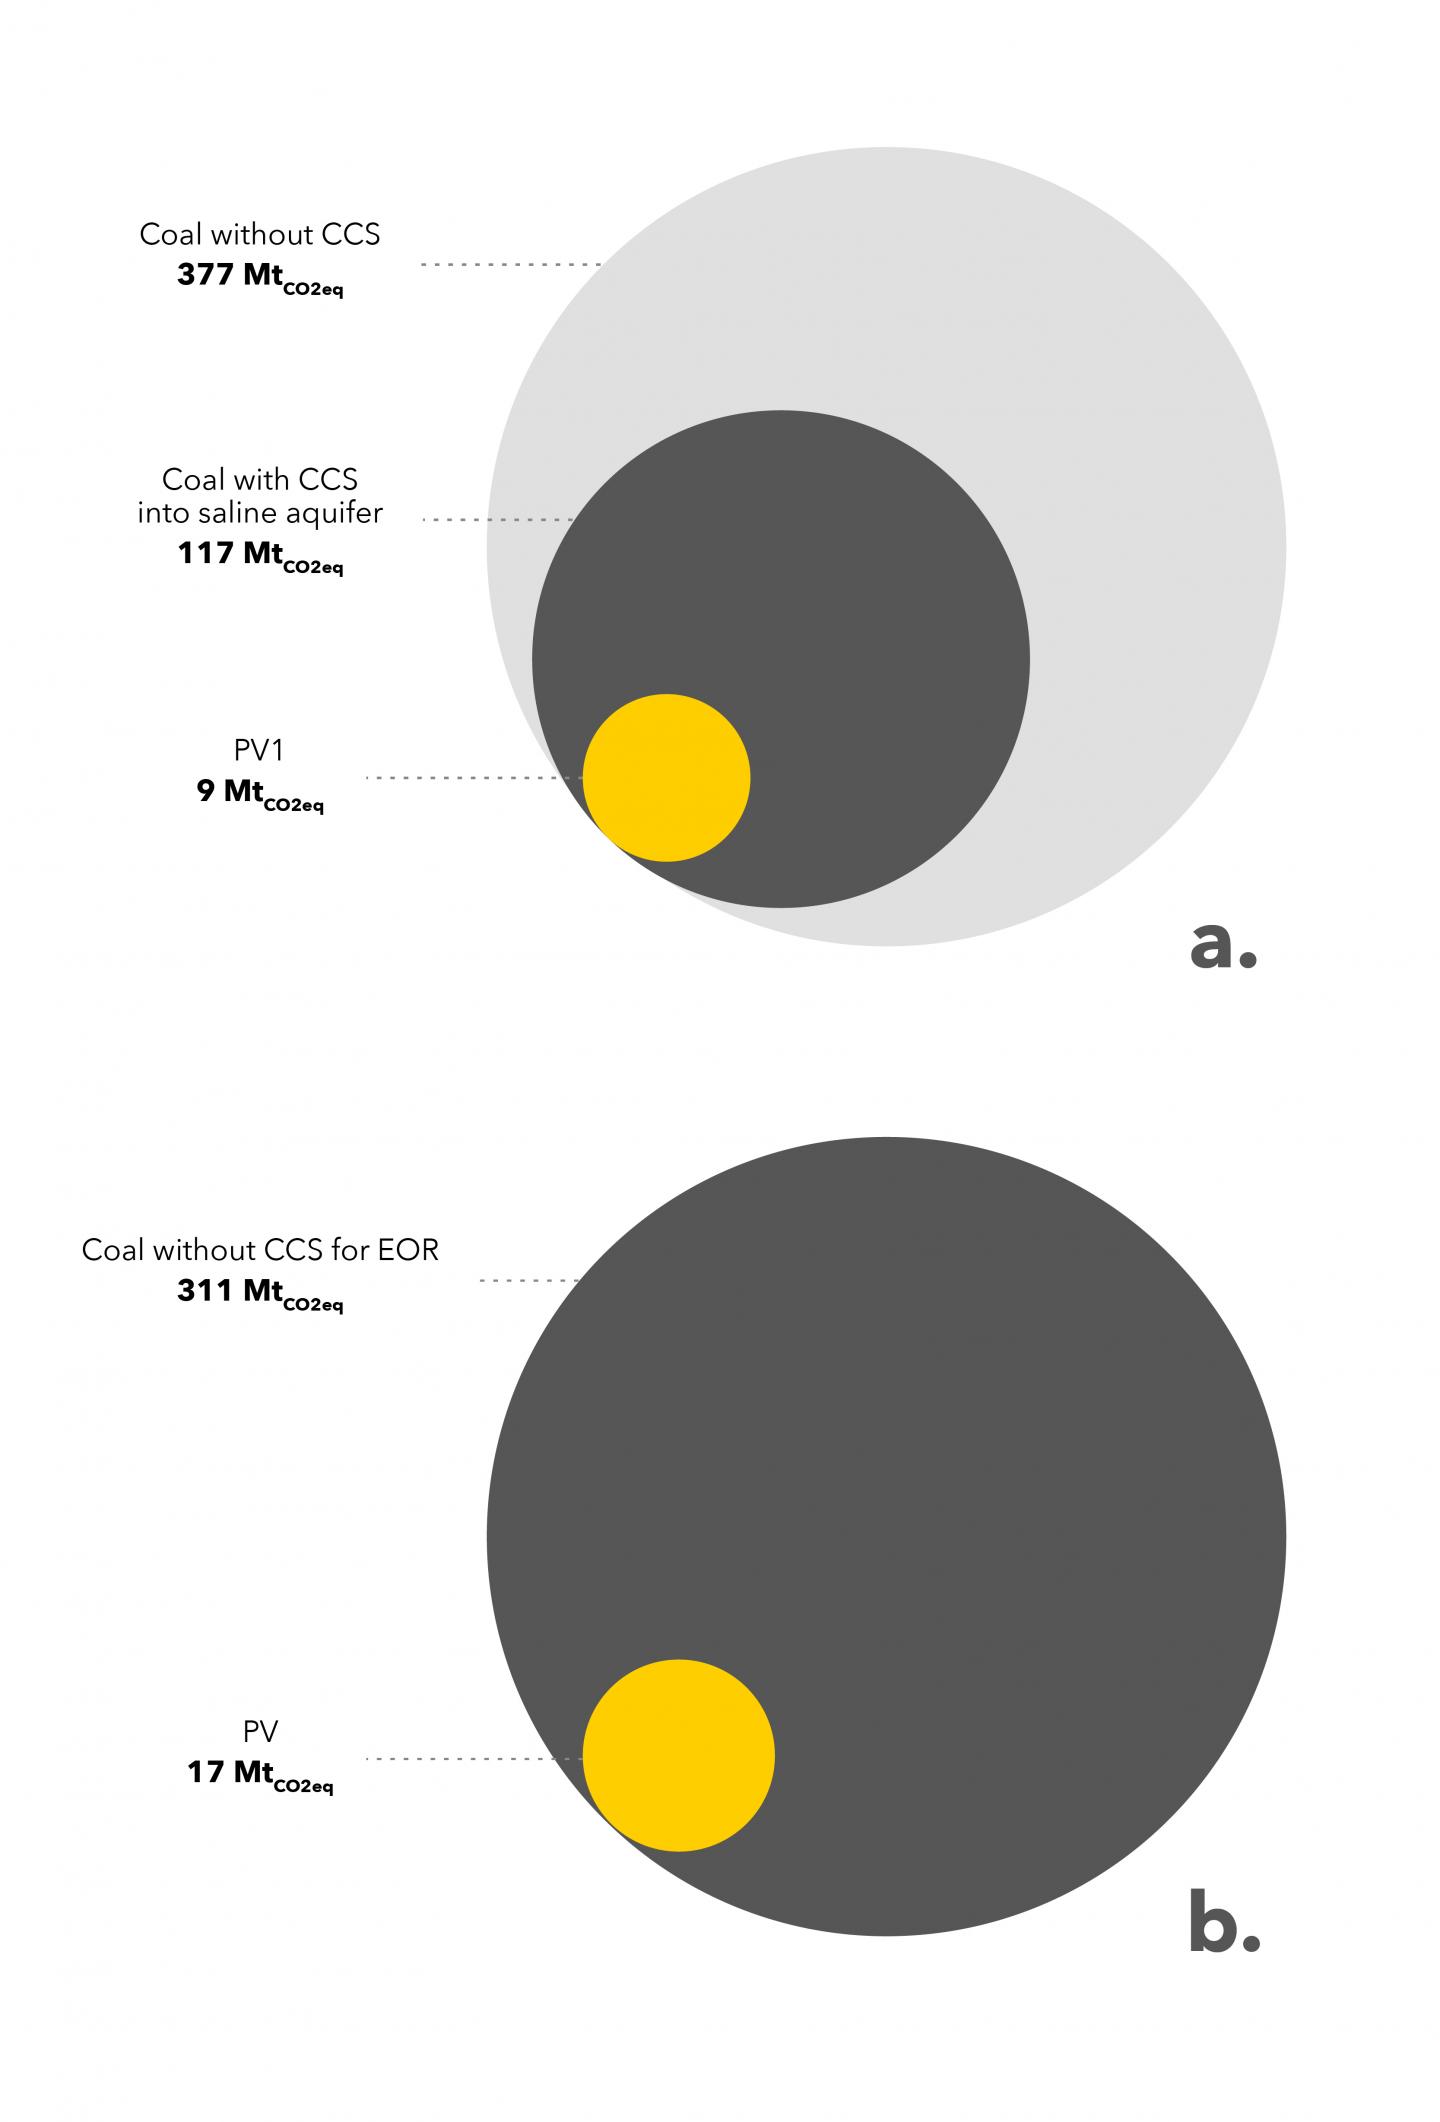 Solar Verus Carbon Capture and Sequestration Coal